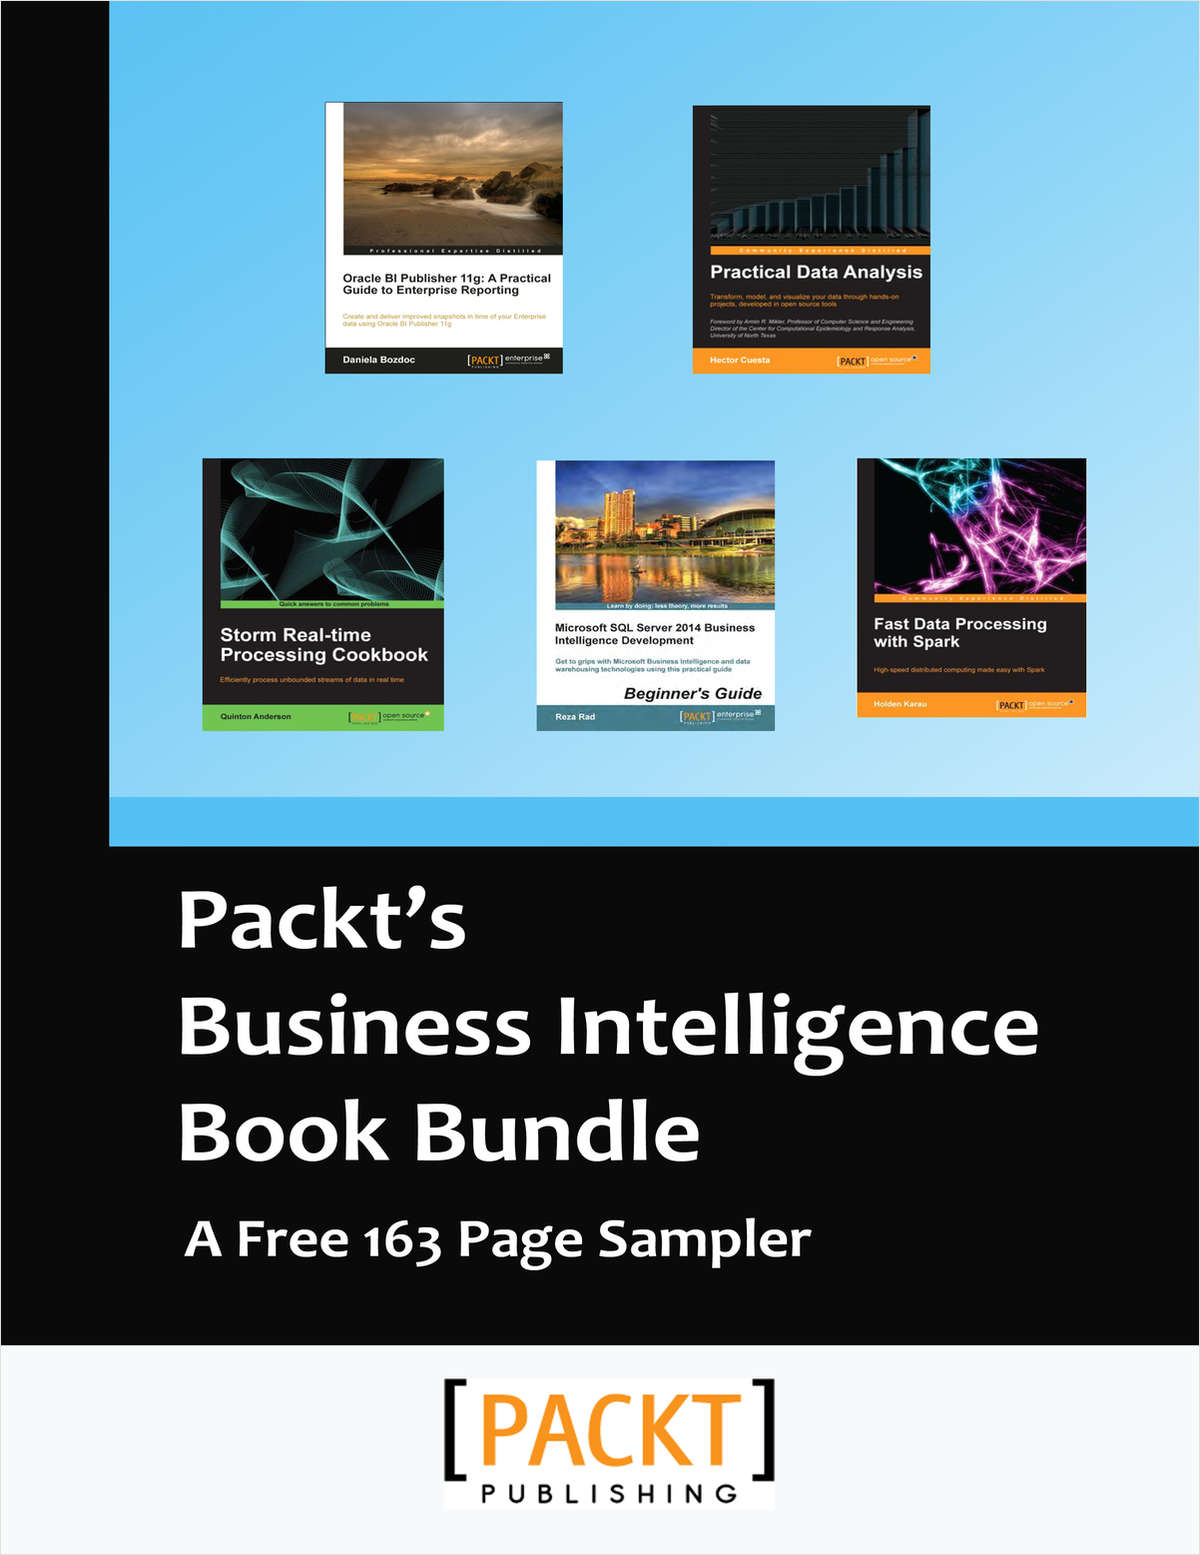 Packt's Business Intelligence Book Bundle -- A Free 163 Page Sampler